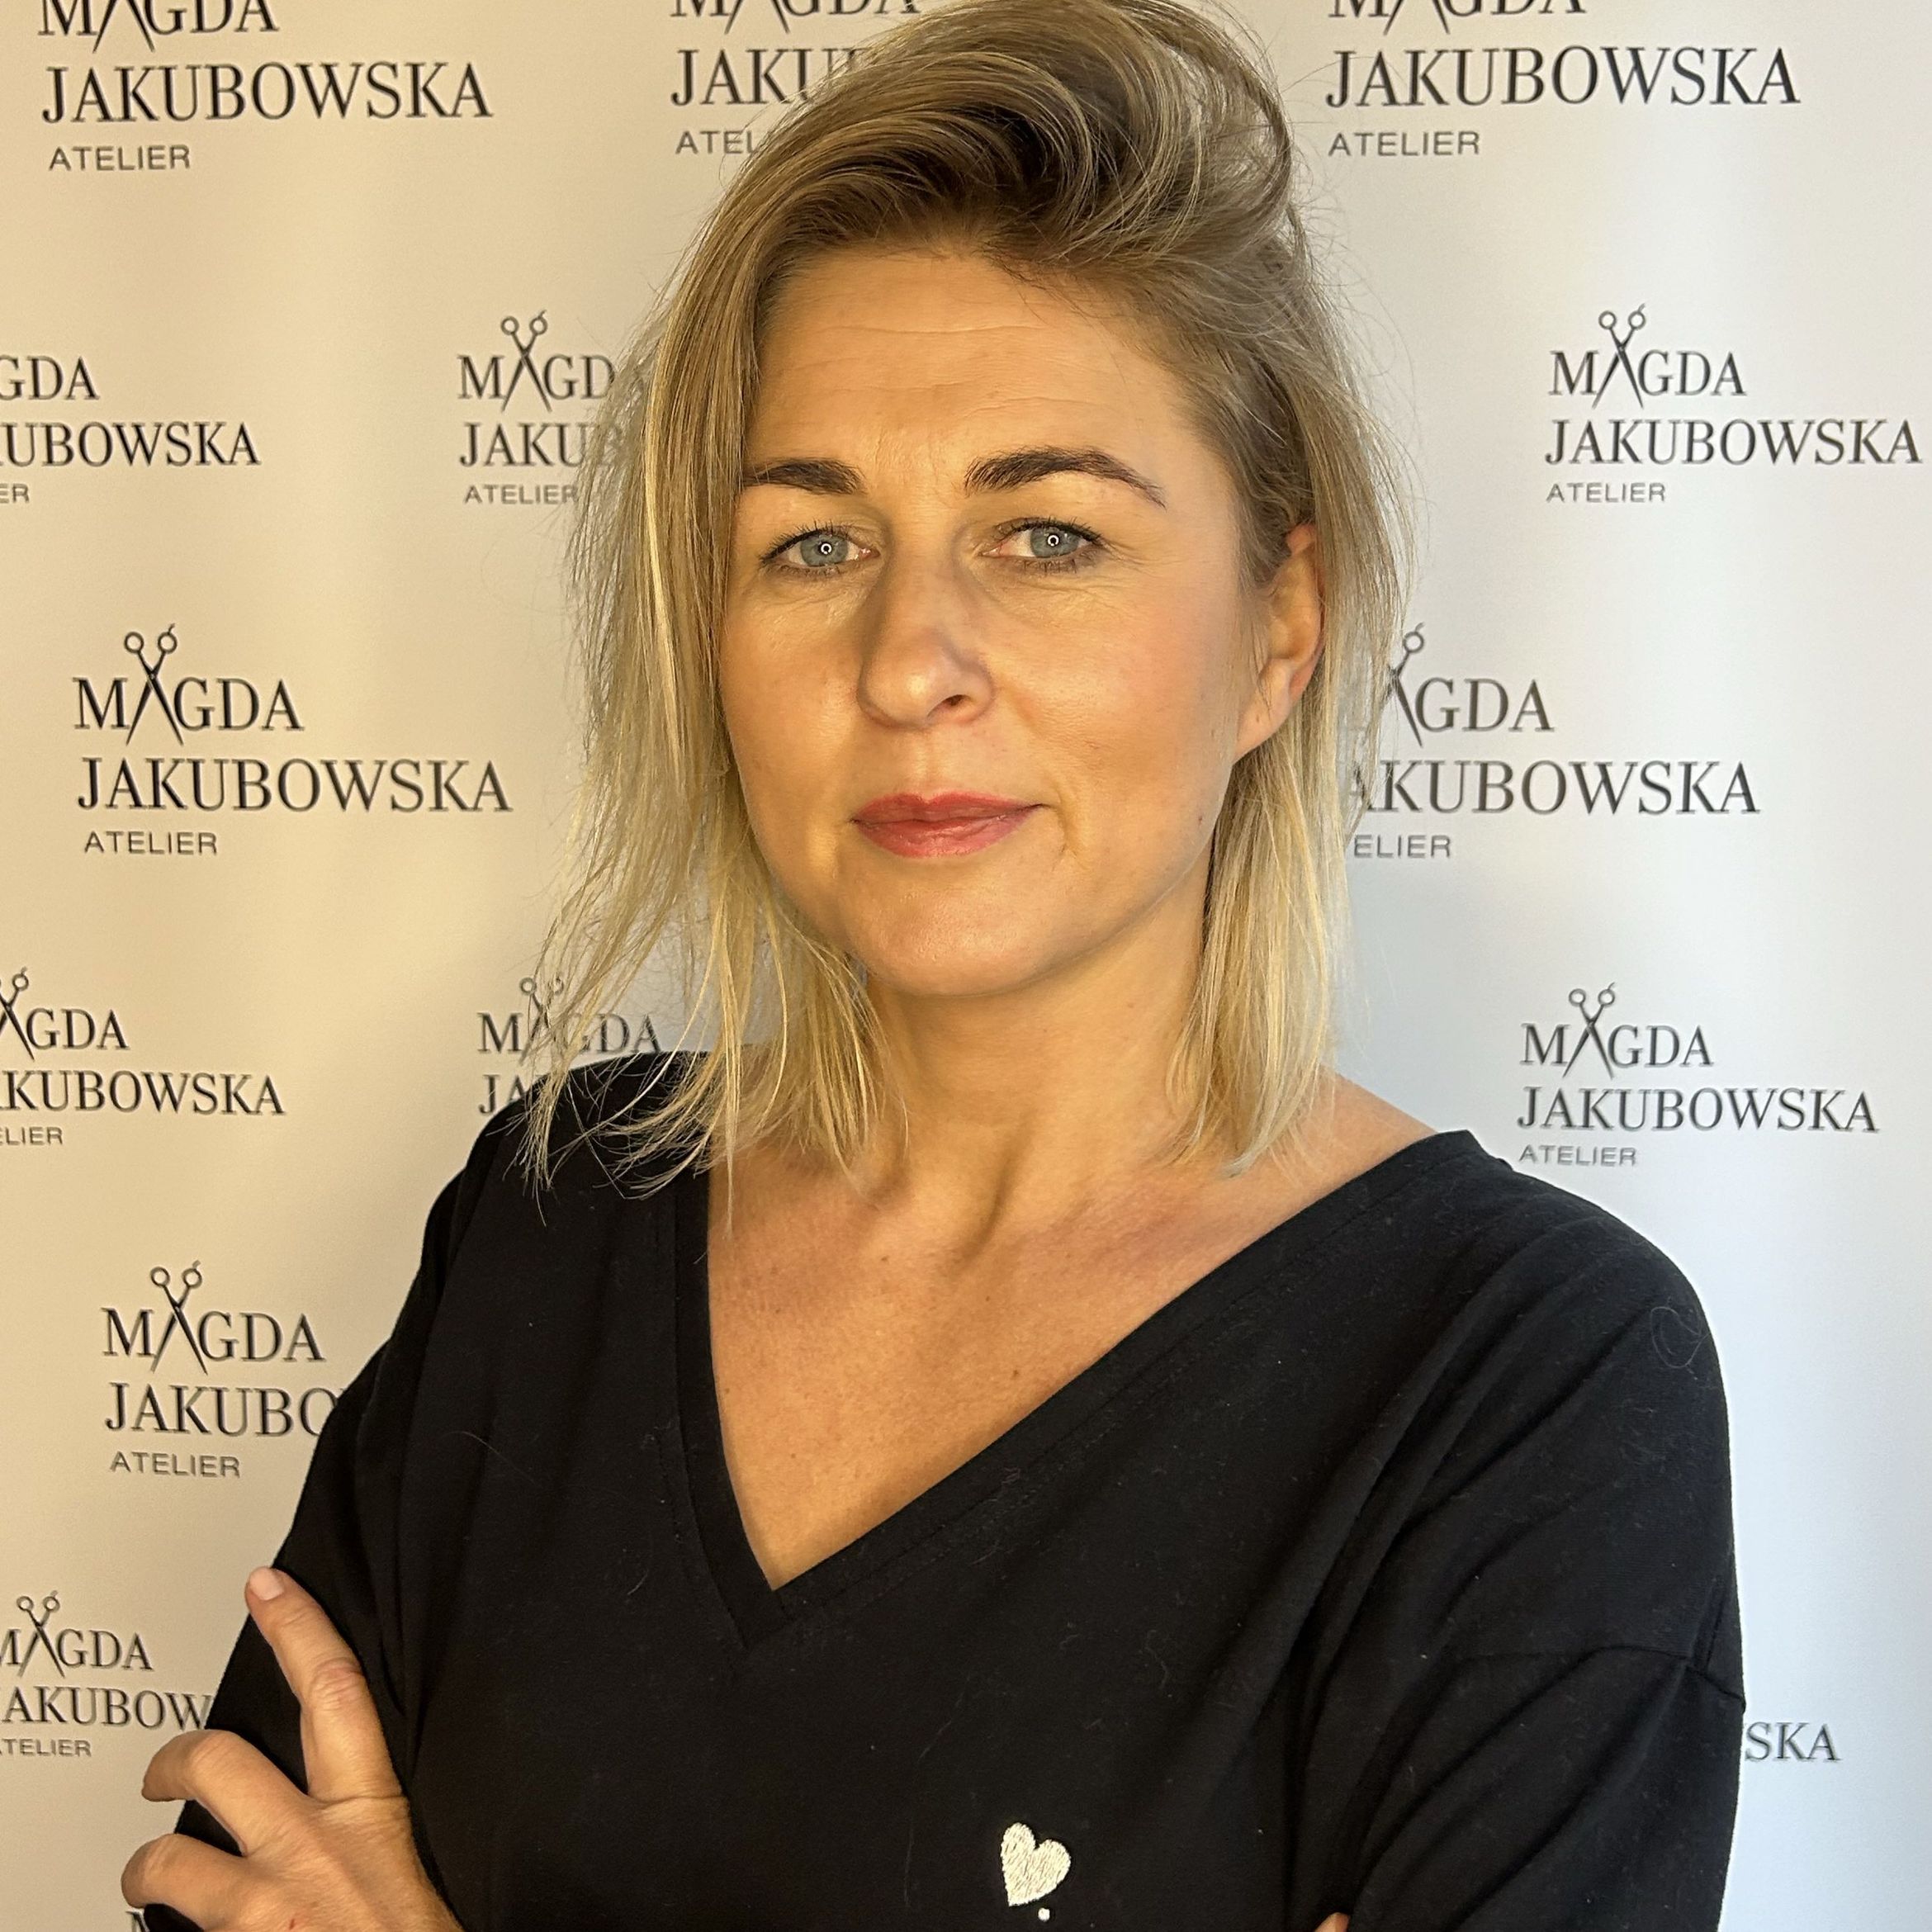 ANIA - Atelier Magda Jakubowska